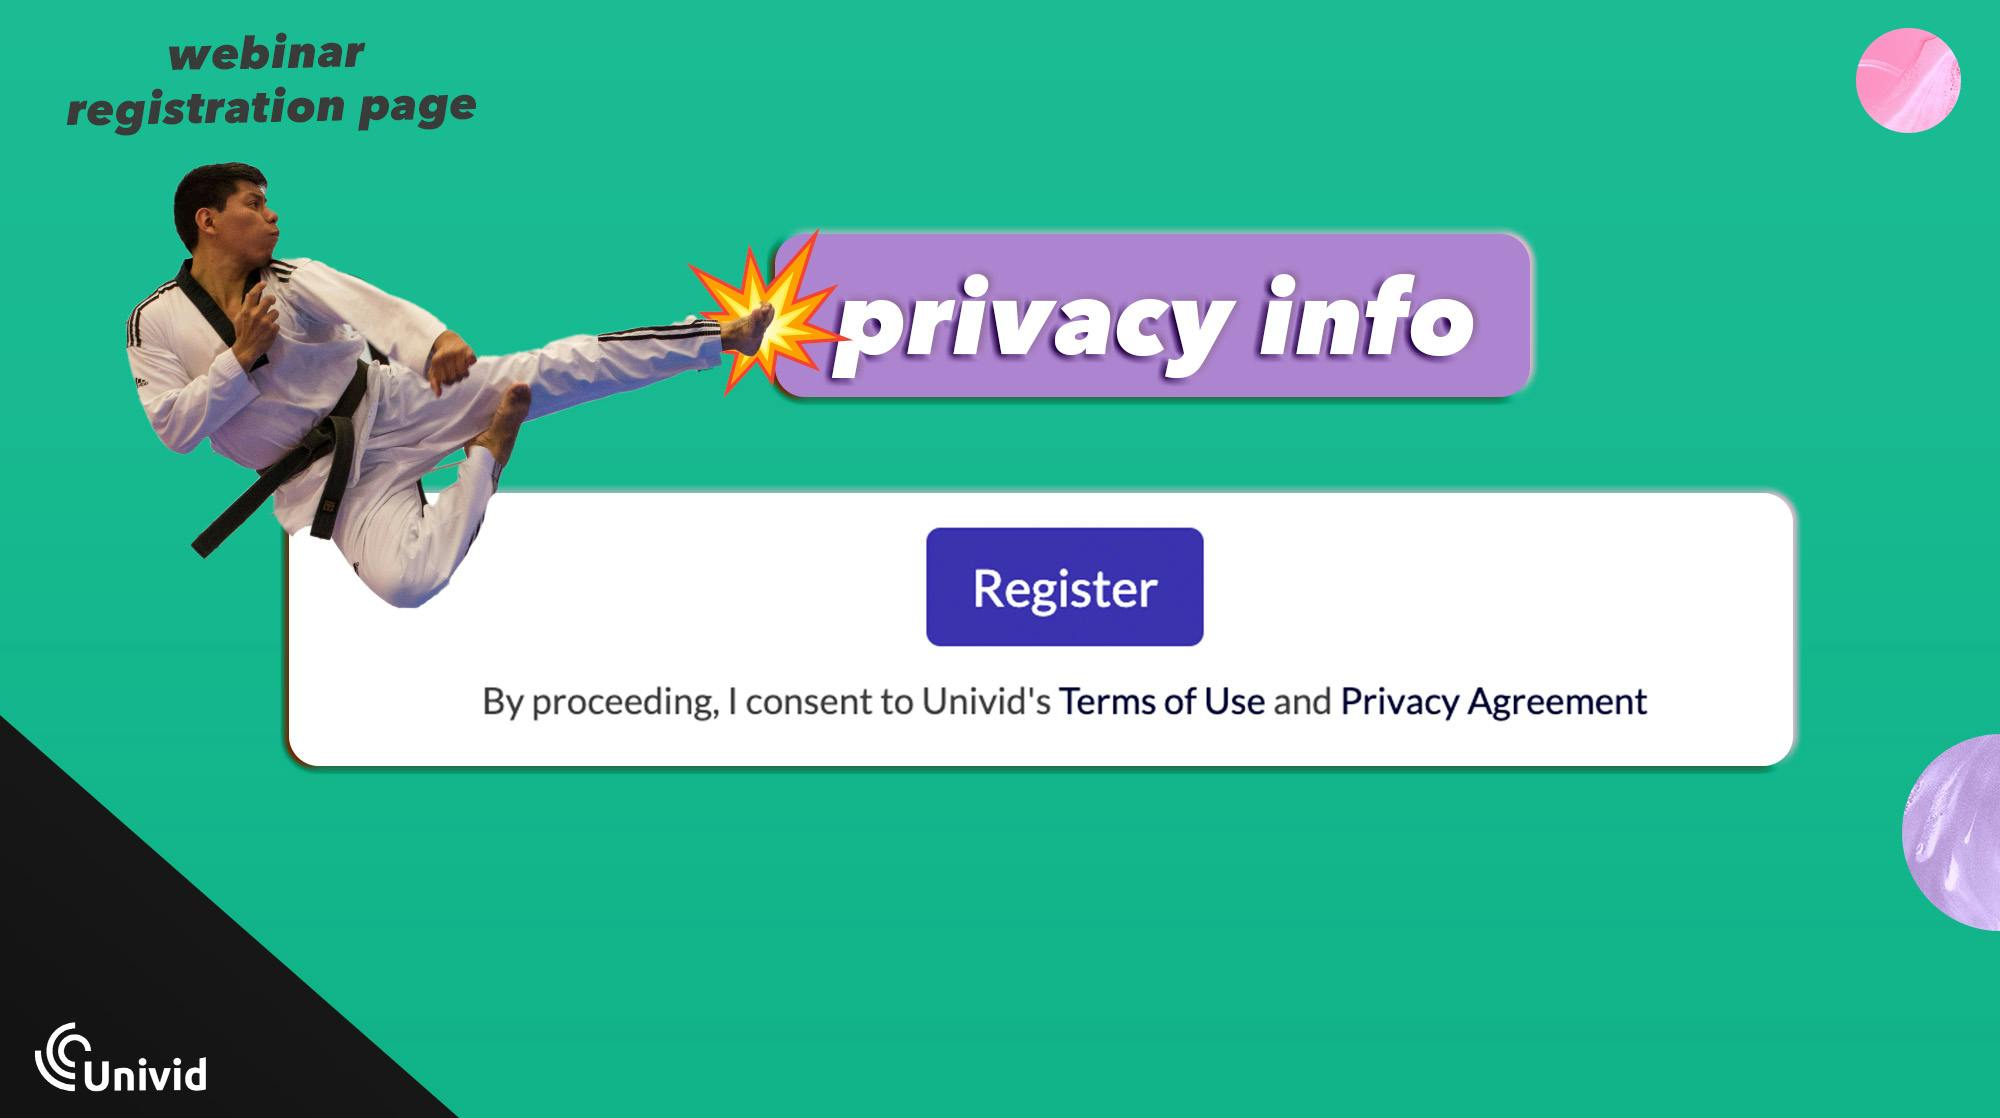 Privacy info - Webinar registration page